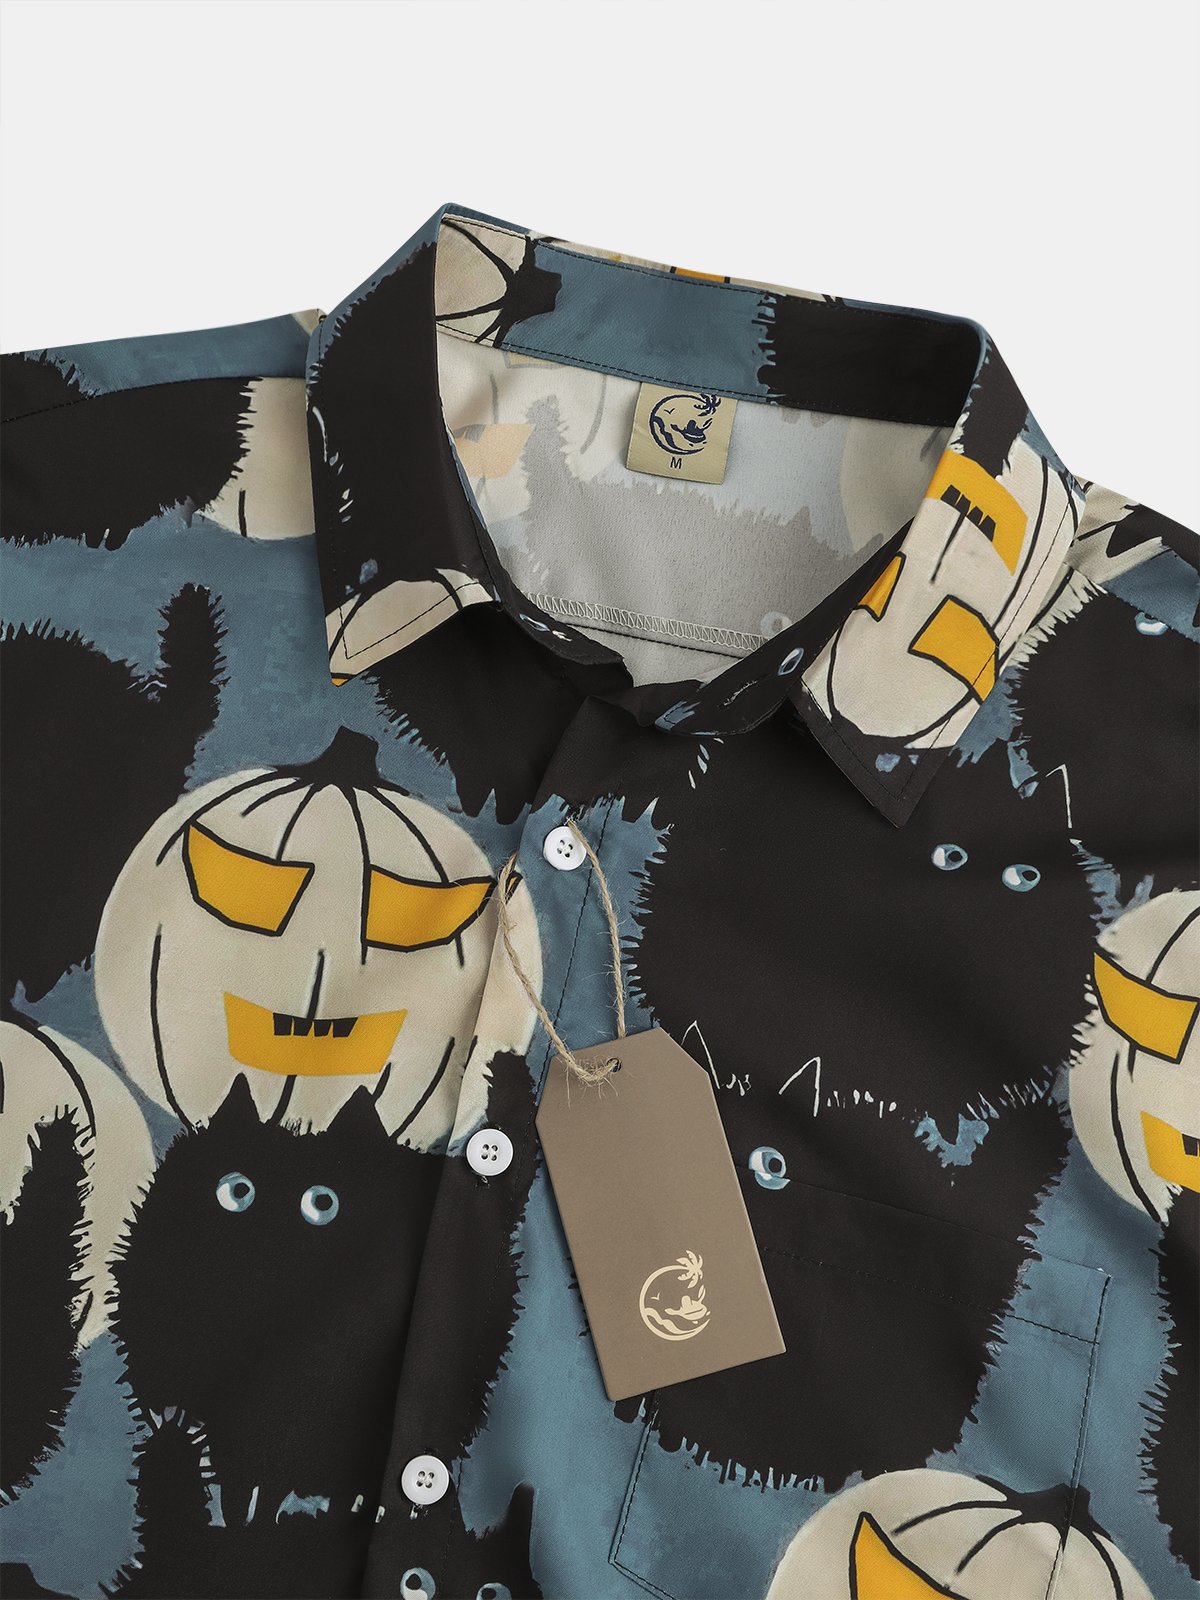 Men's Pumpkin Cat Print Wrinkle Resistant Moisture Wicking Fabric Lapel Short Sleeve Hawaiian Shirt